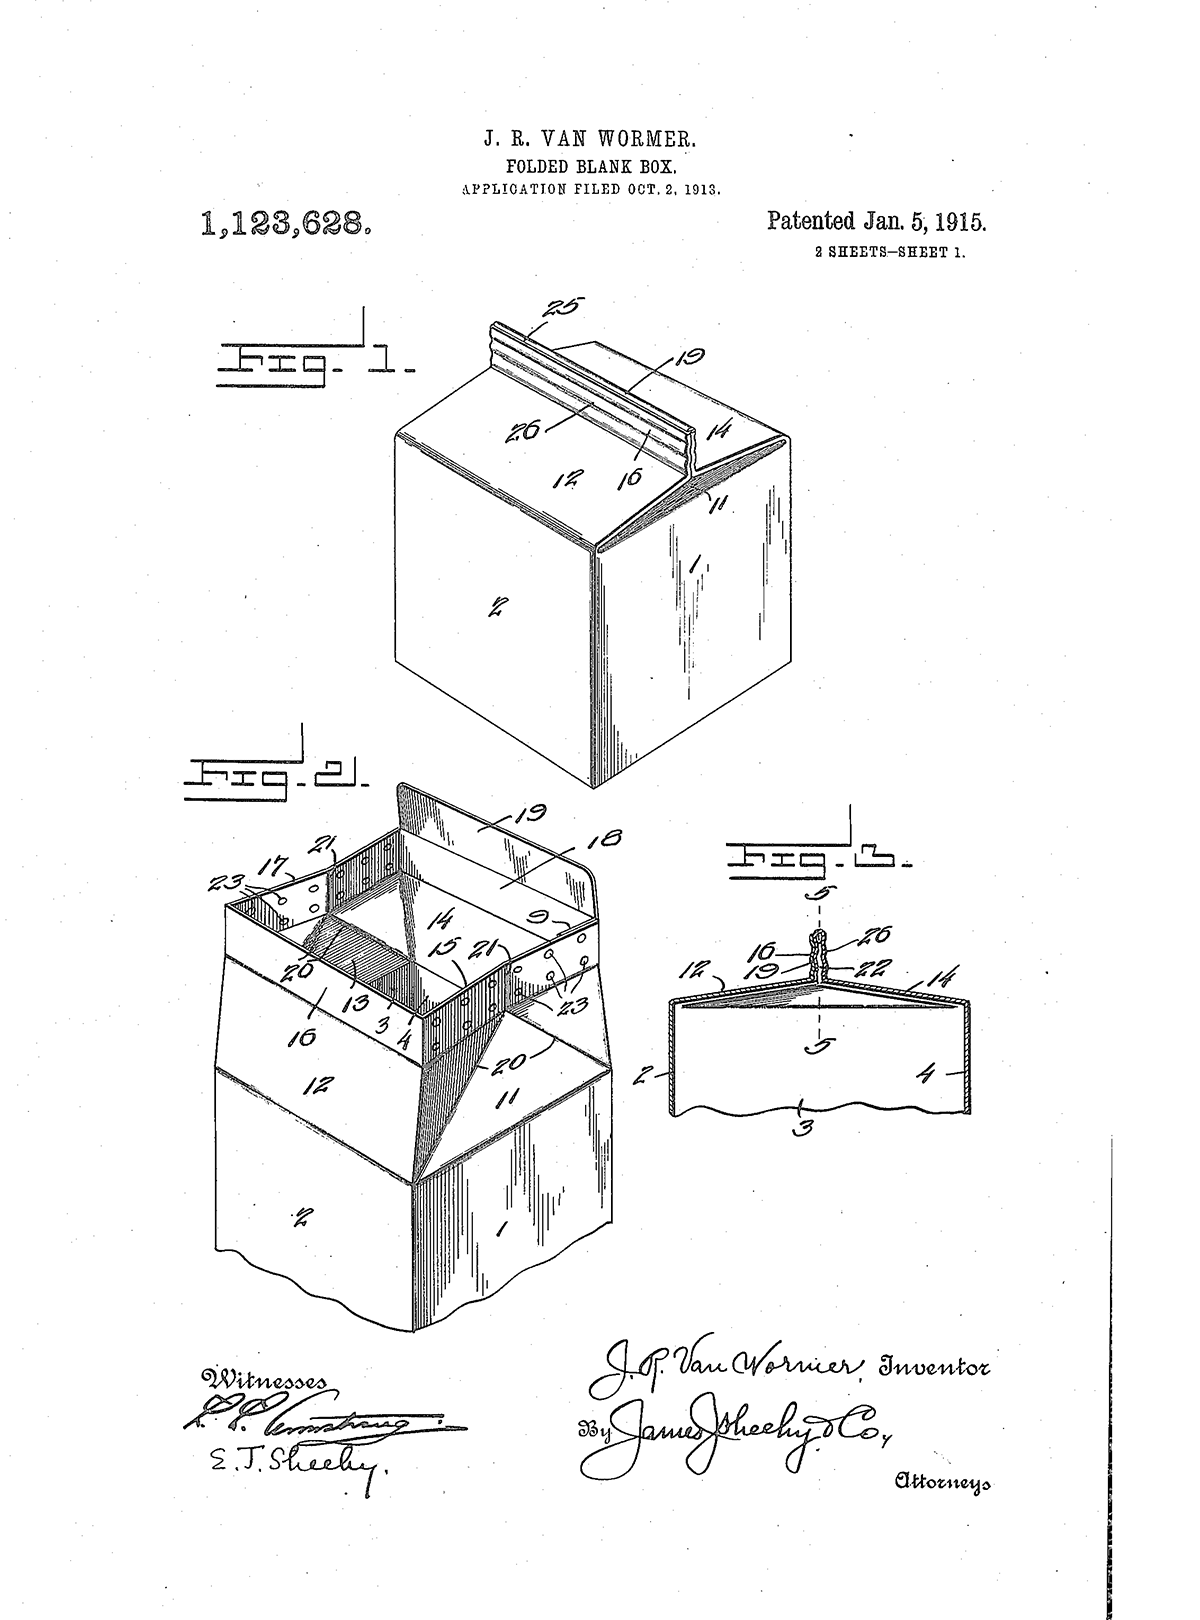  John Van Wormer, “Folded Blank Box,” Application 1913, U.S. Patent, January 1915